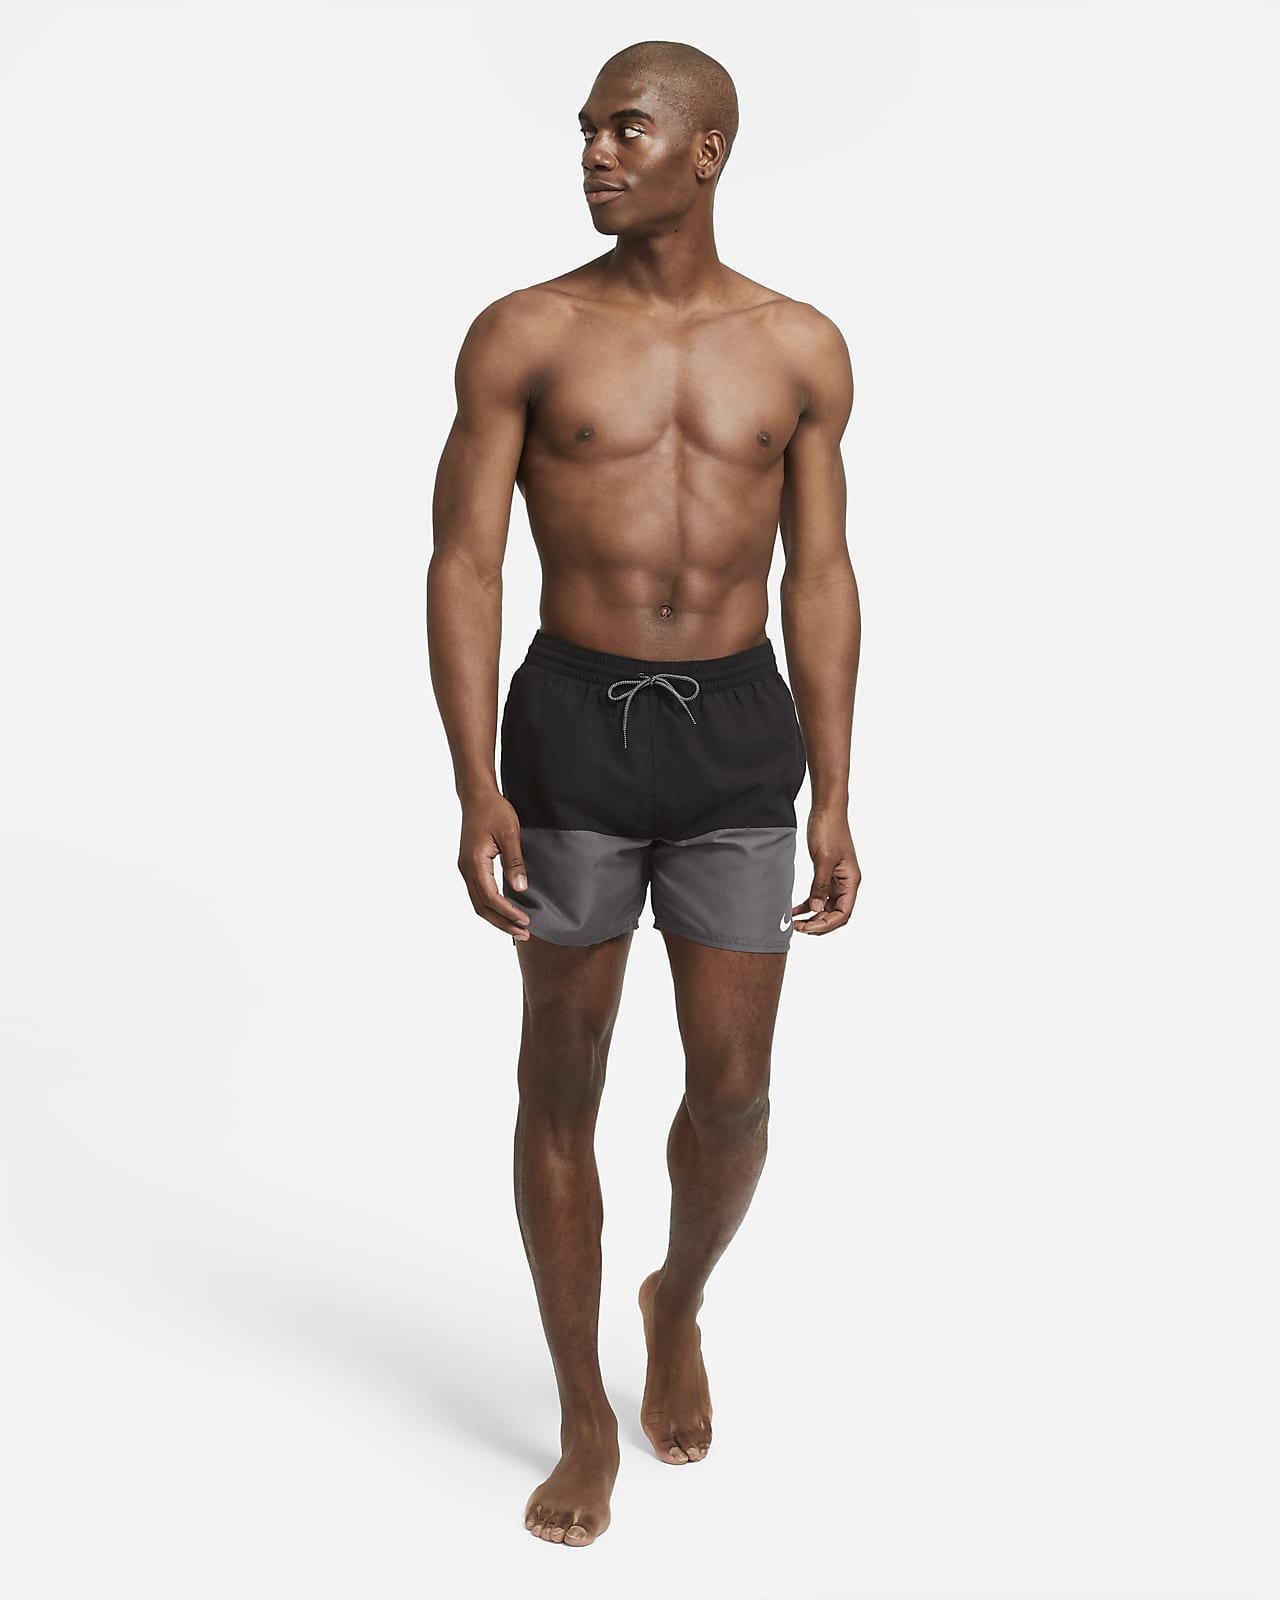 Nike Split Men's 13cm (approx.) Swimming Trunks. Nike LU